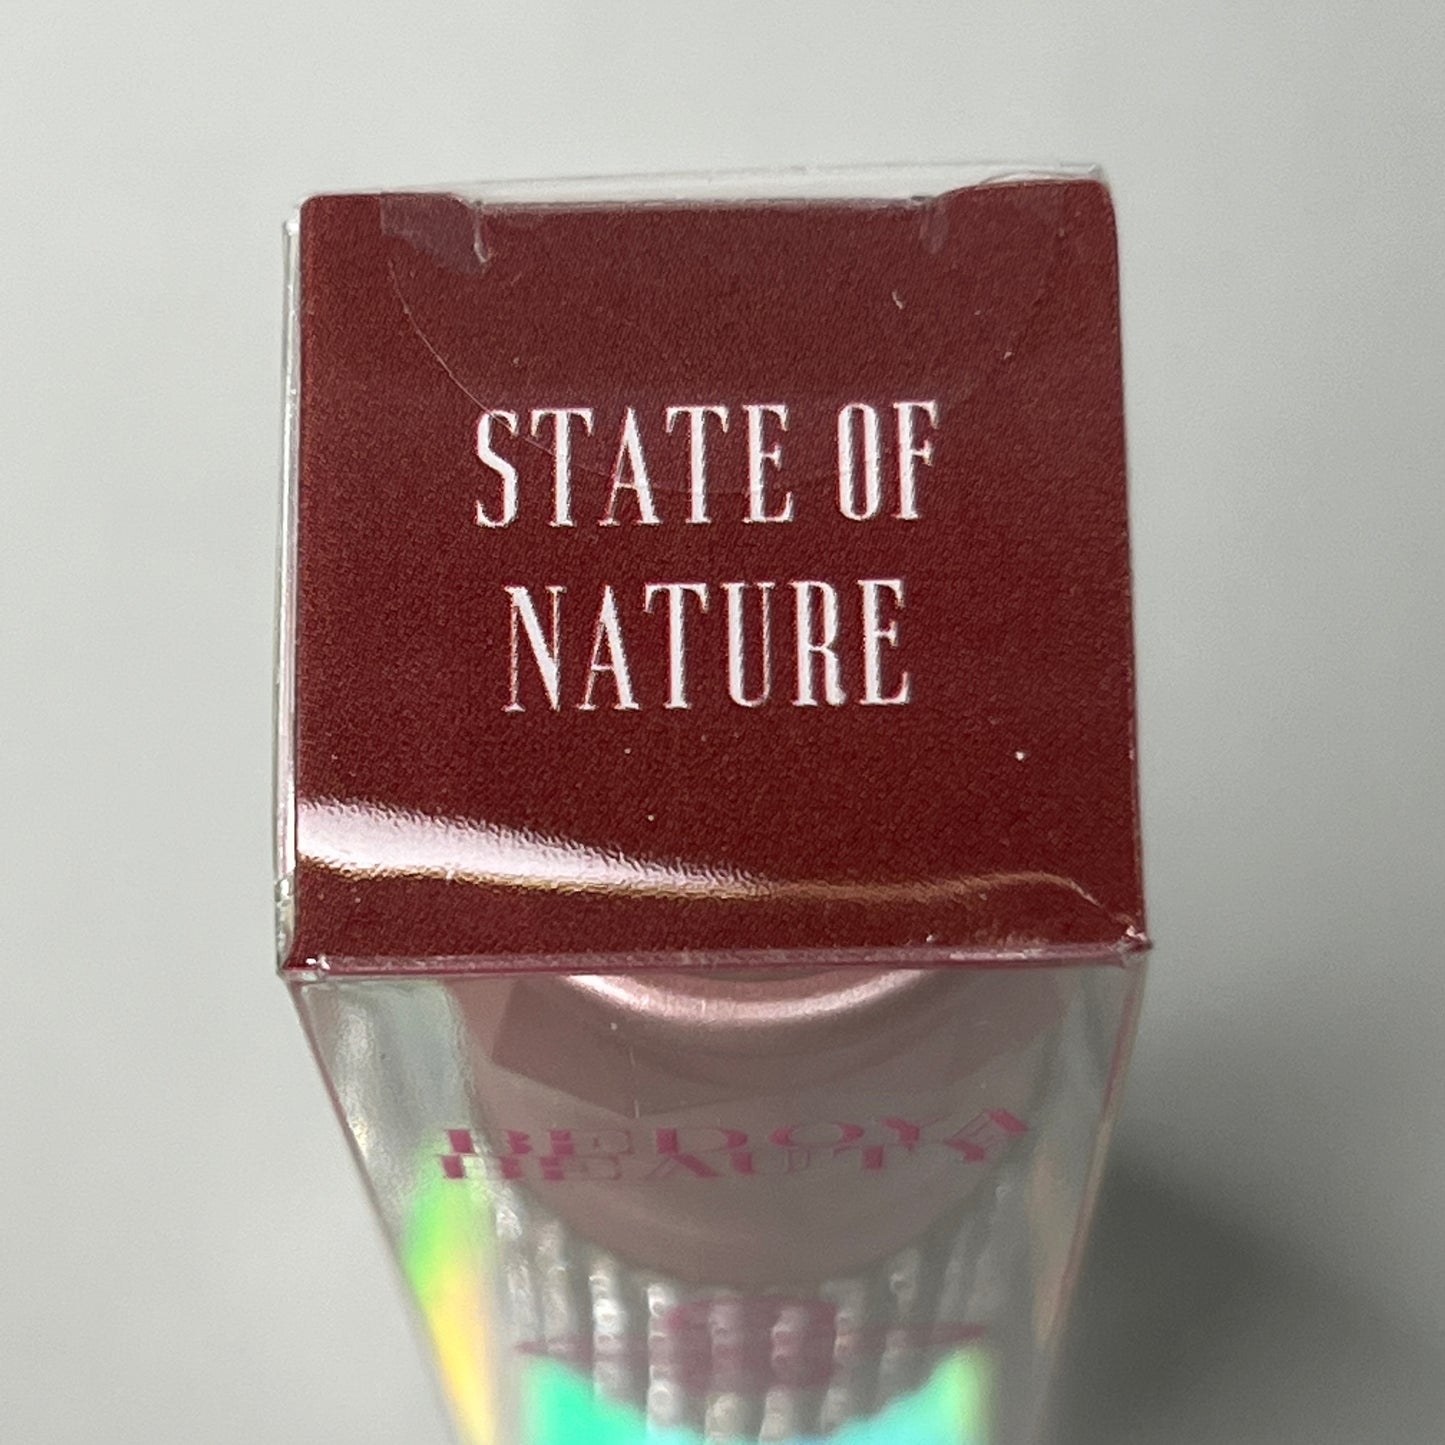 BEDOYA BEAUTY PRISM Lipstick Matte State of Nature (Warm Chocolate Brown)3.8g (NEW)